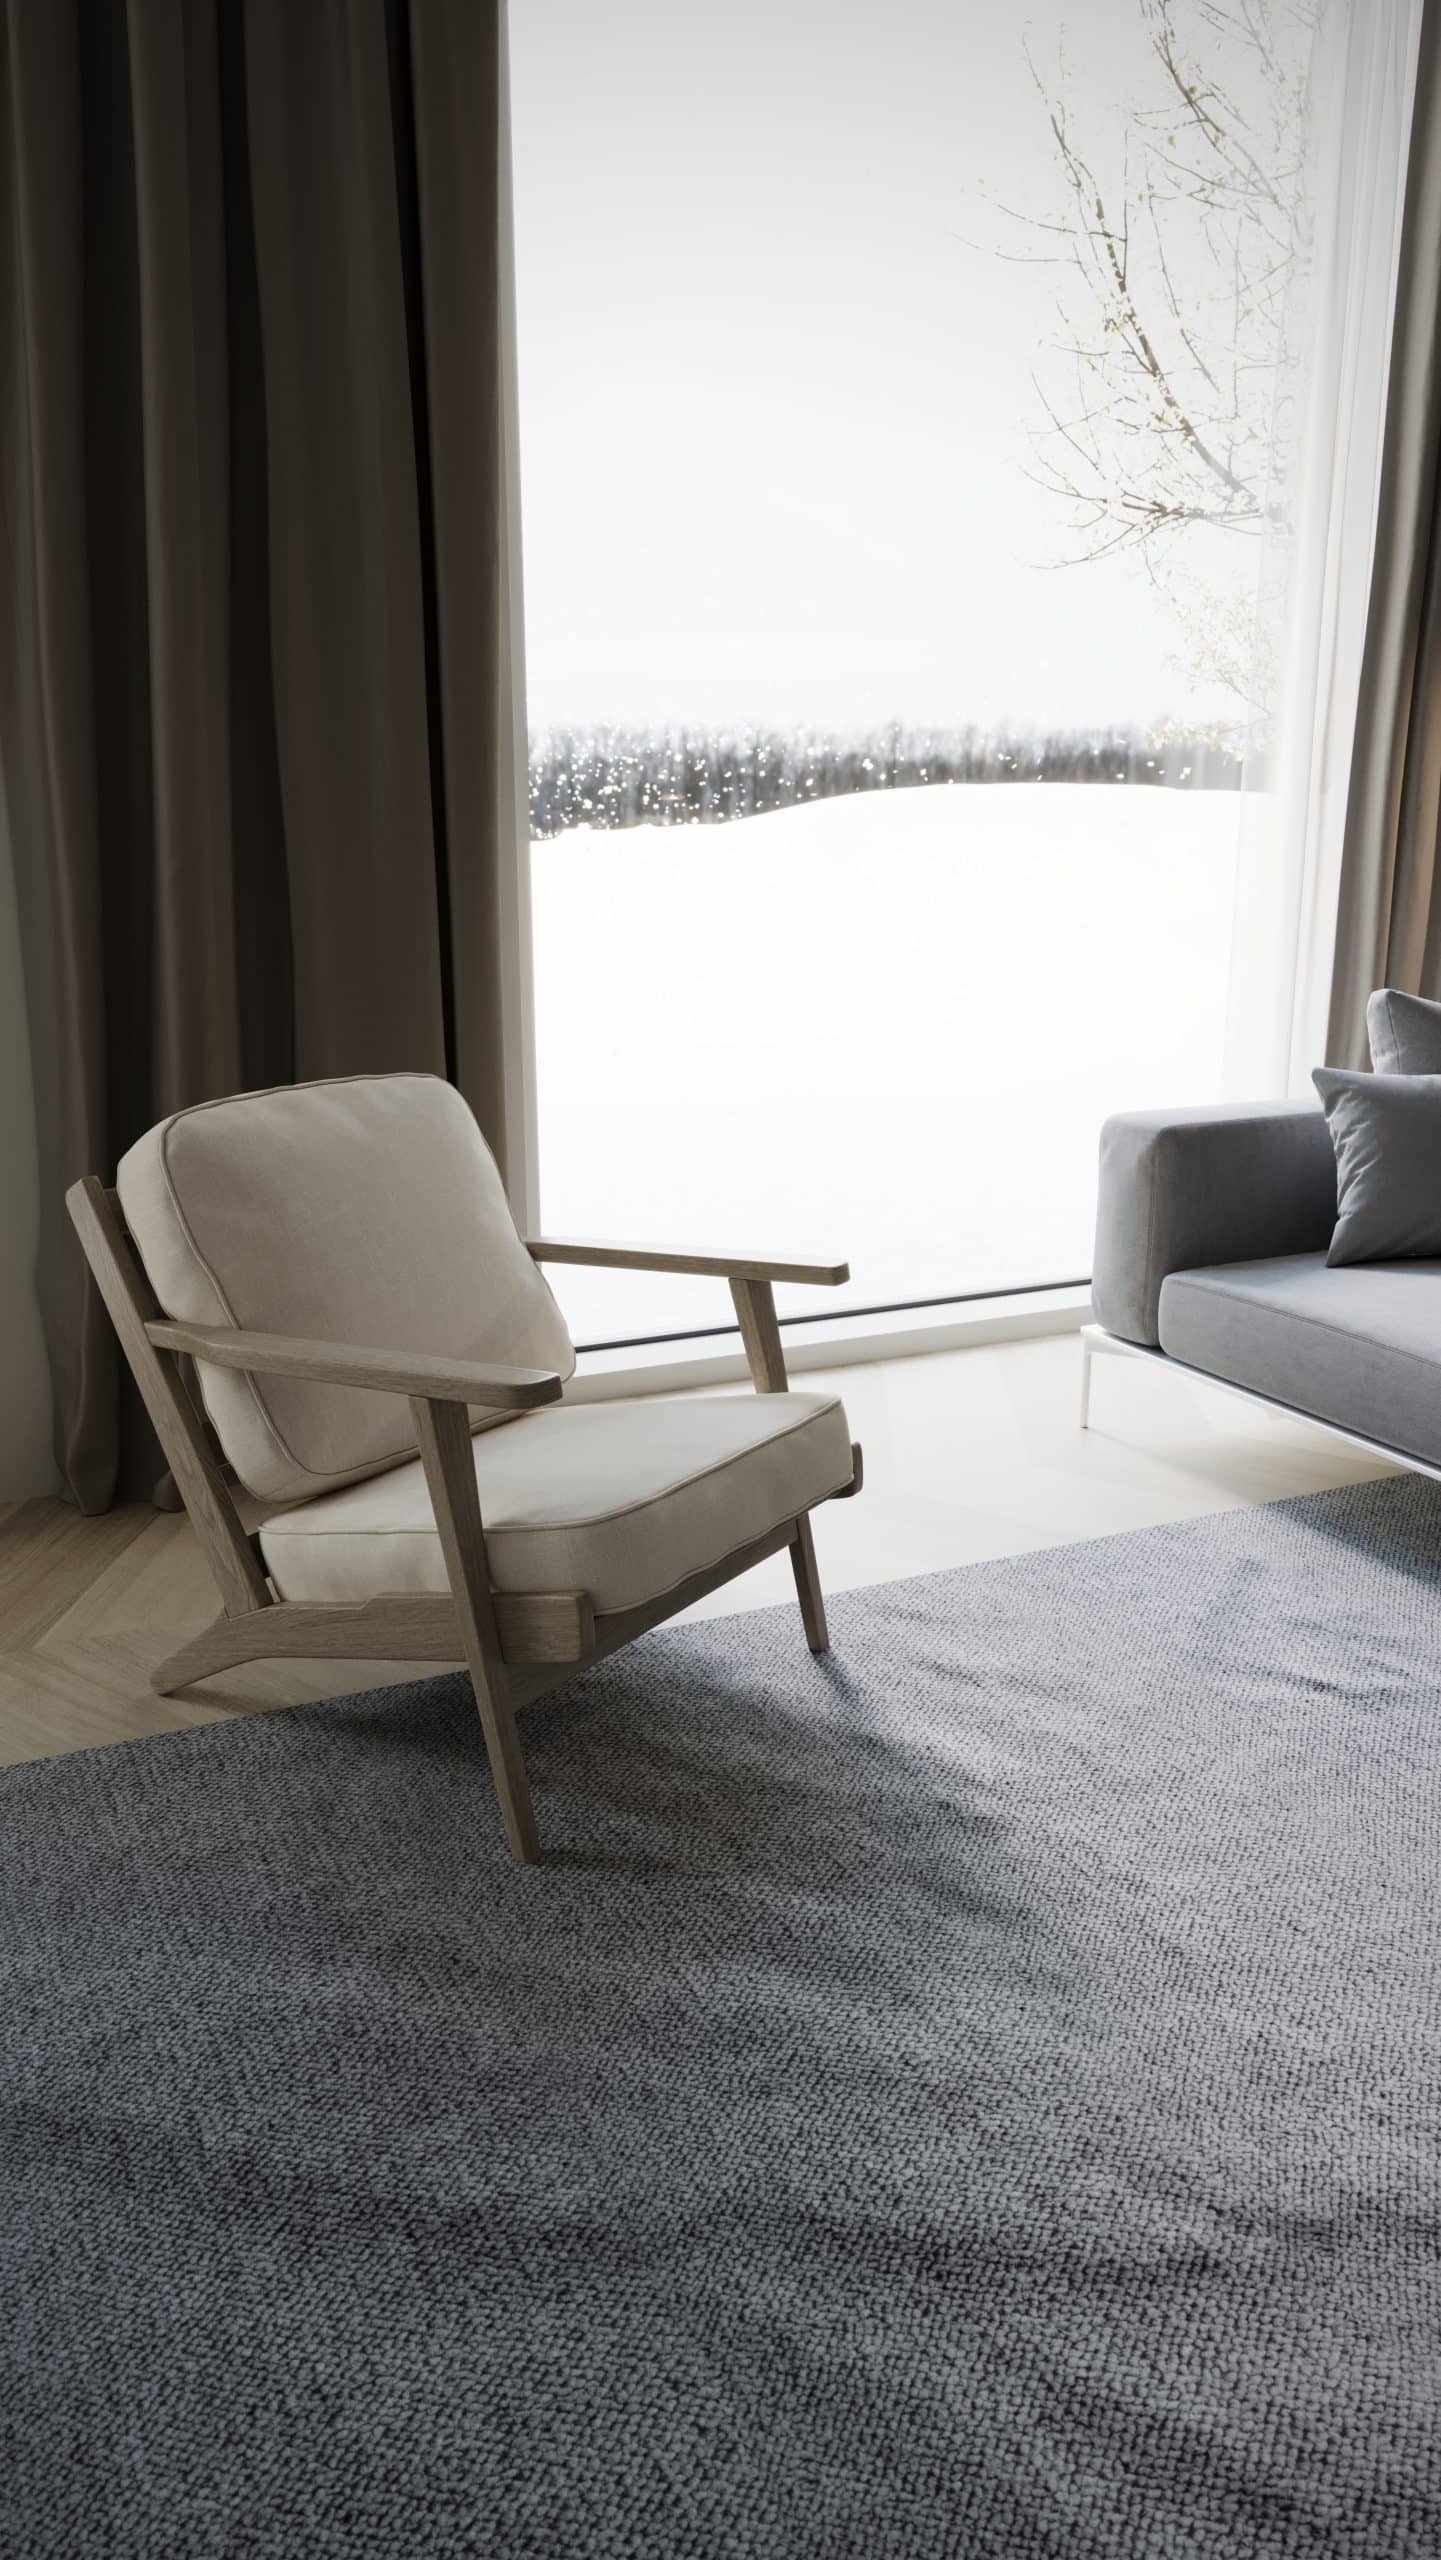 3D visual of an armchair with beige cushions, a big window showcasing snowfall, and a hint of a sofa corner by CG VIZ Studio.